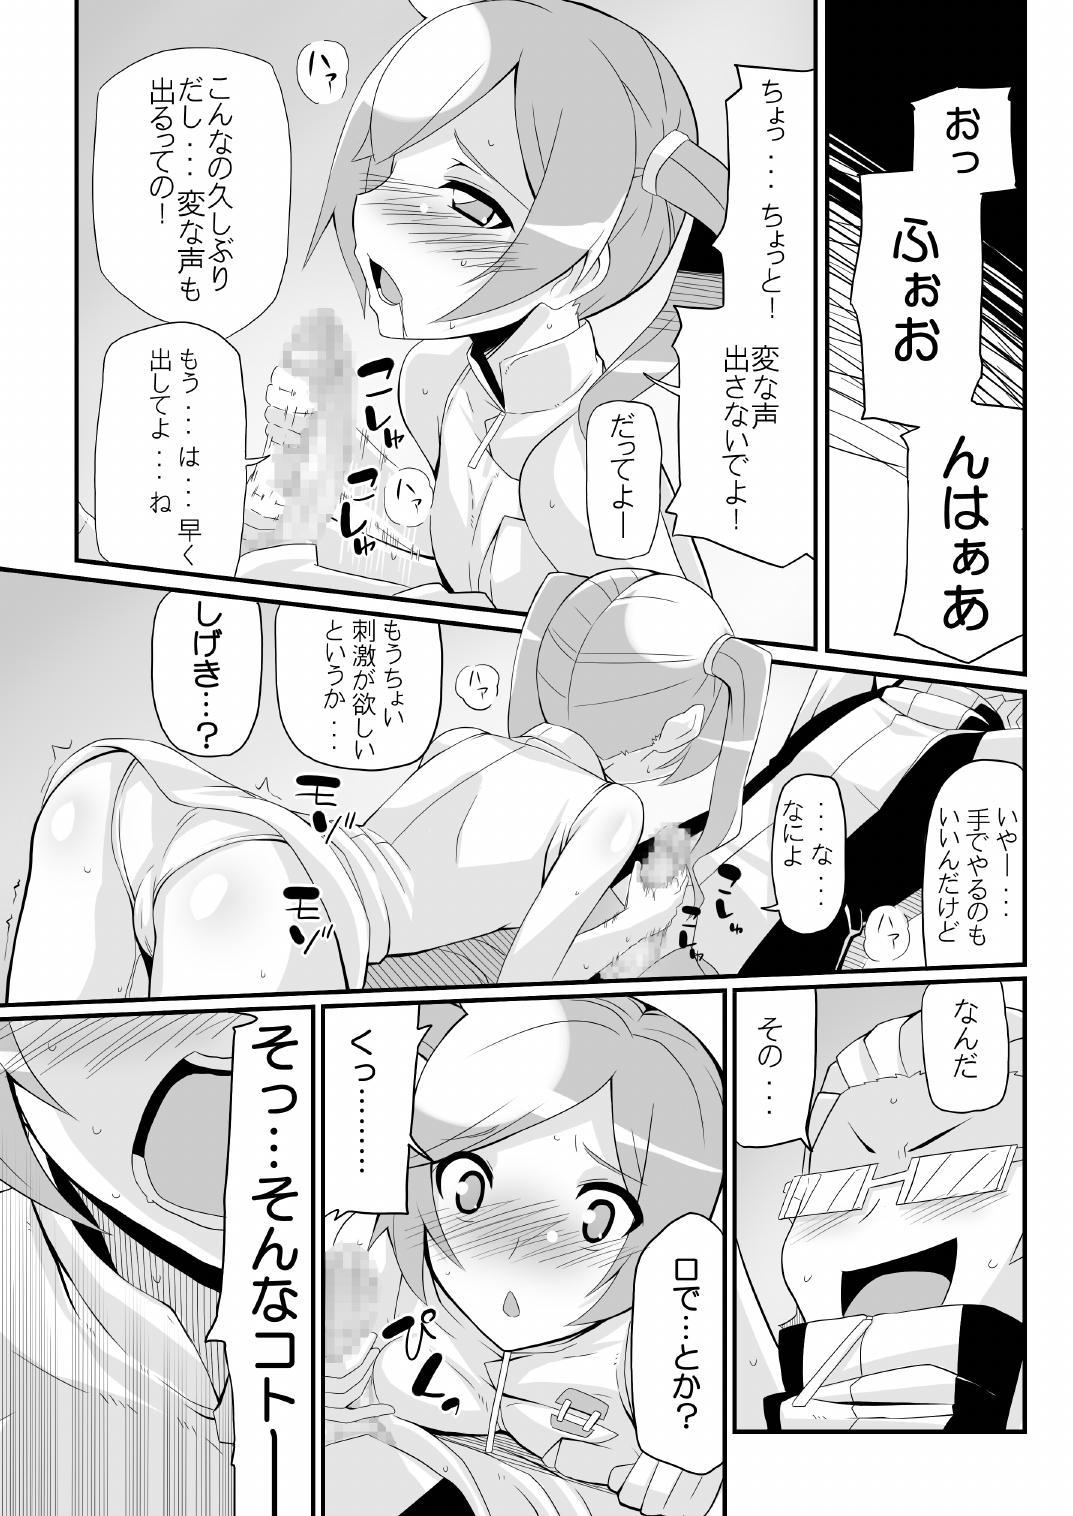 Bunda Re:Akiho/Rinatize Ero - Digimon Hungarian - Page 7